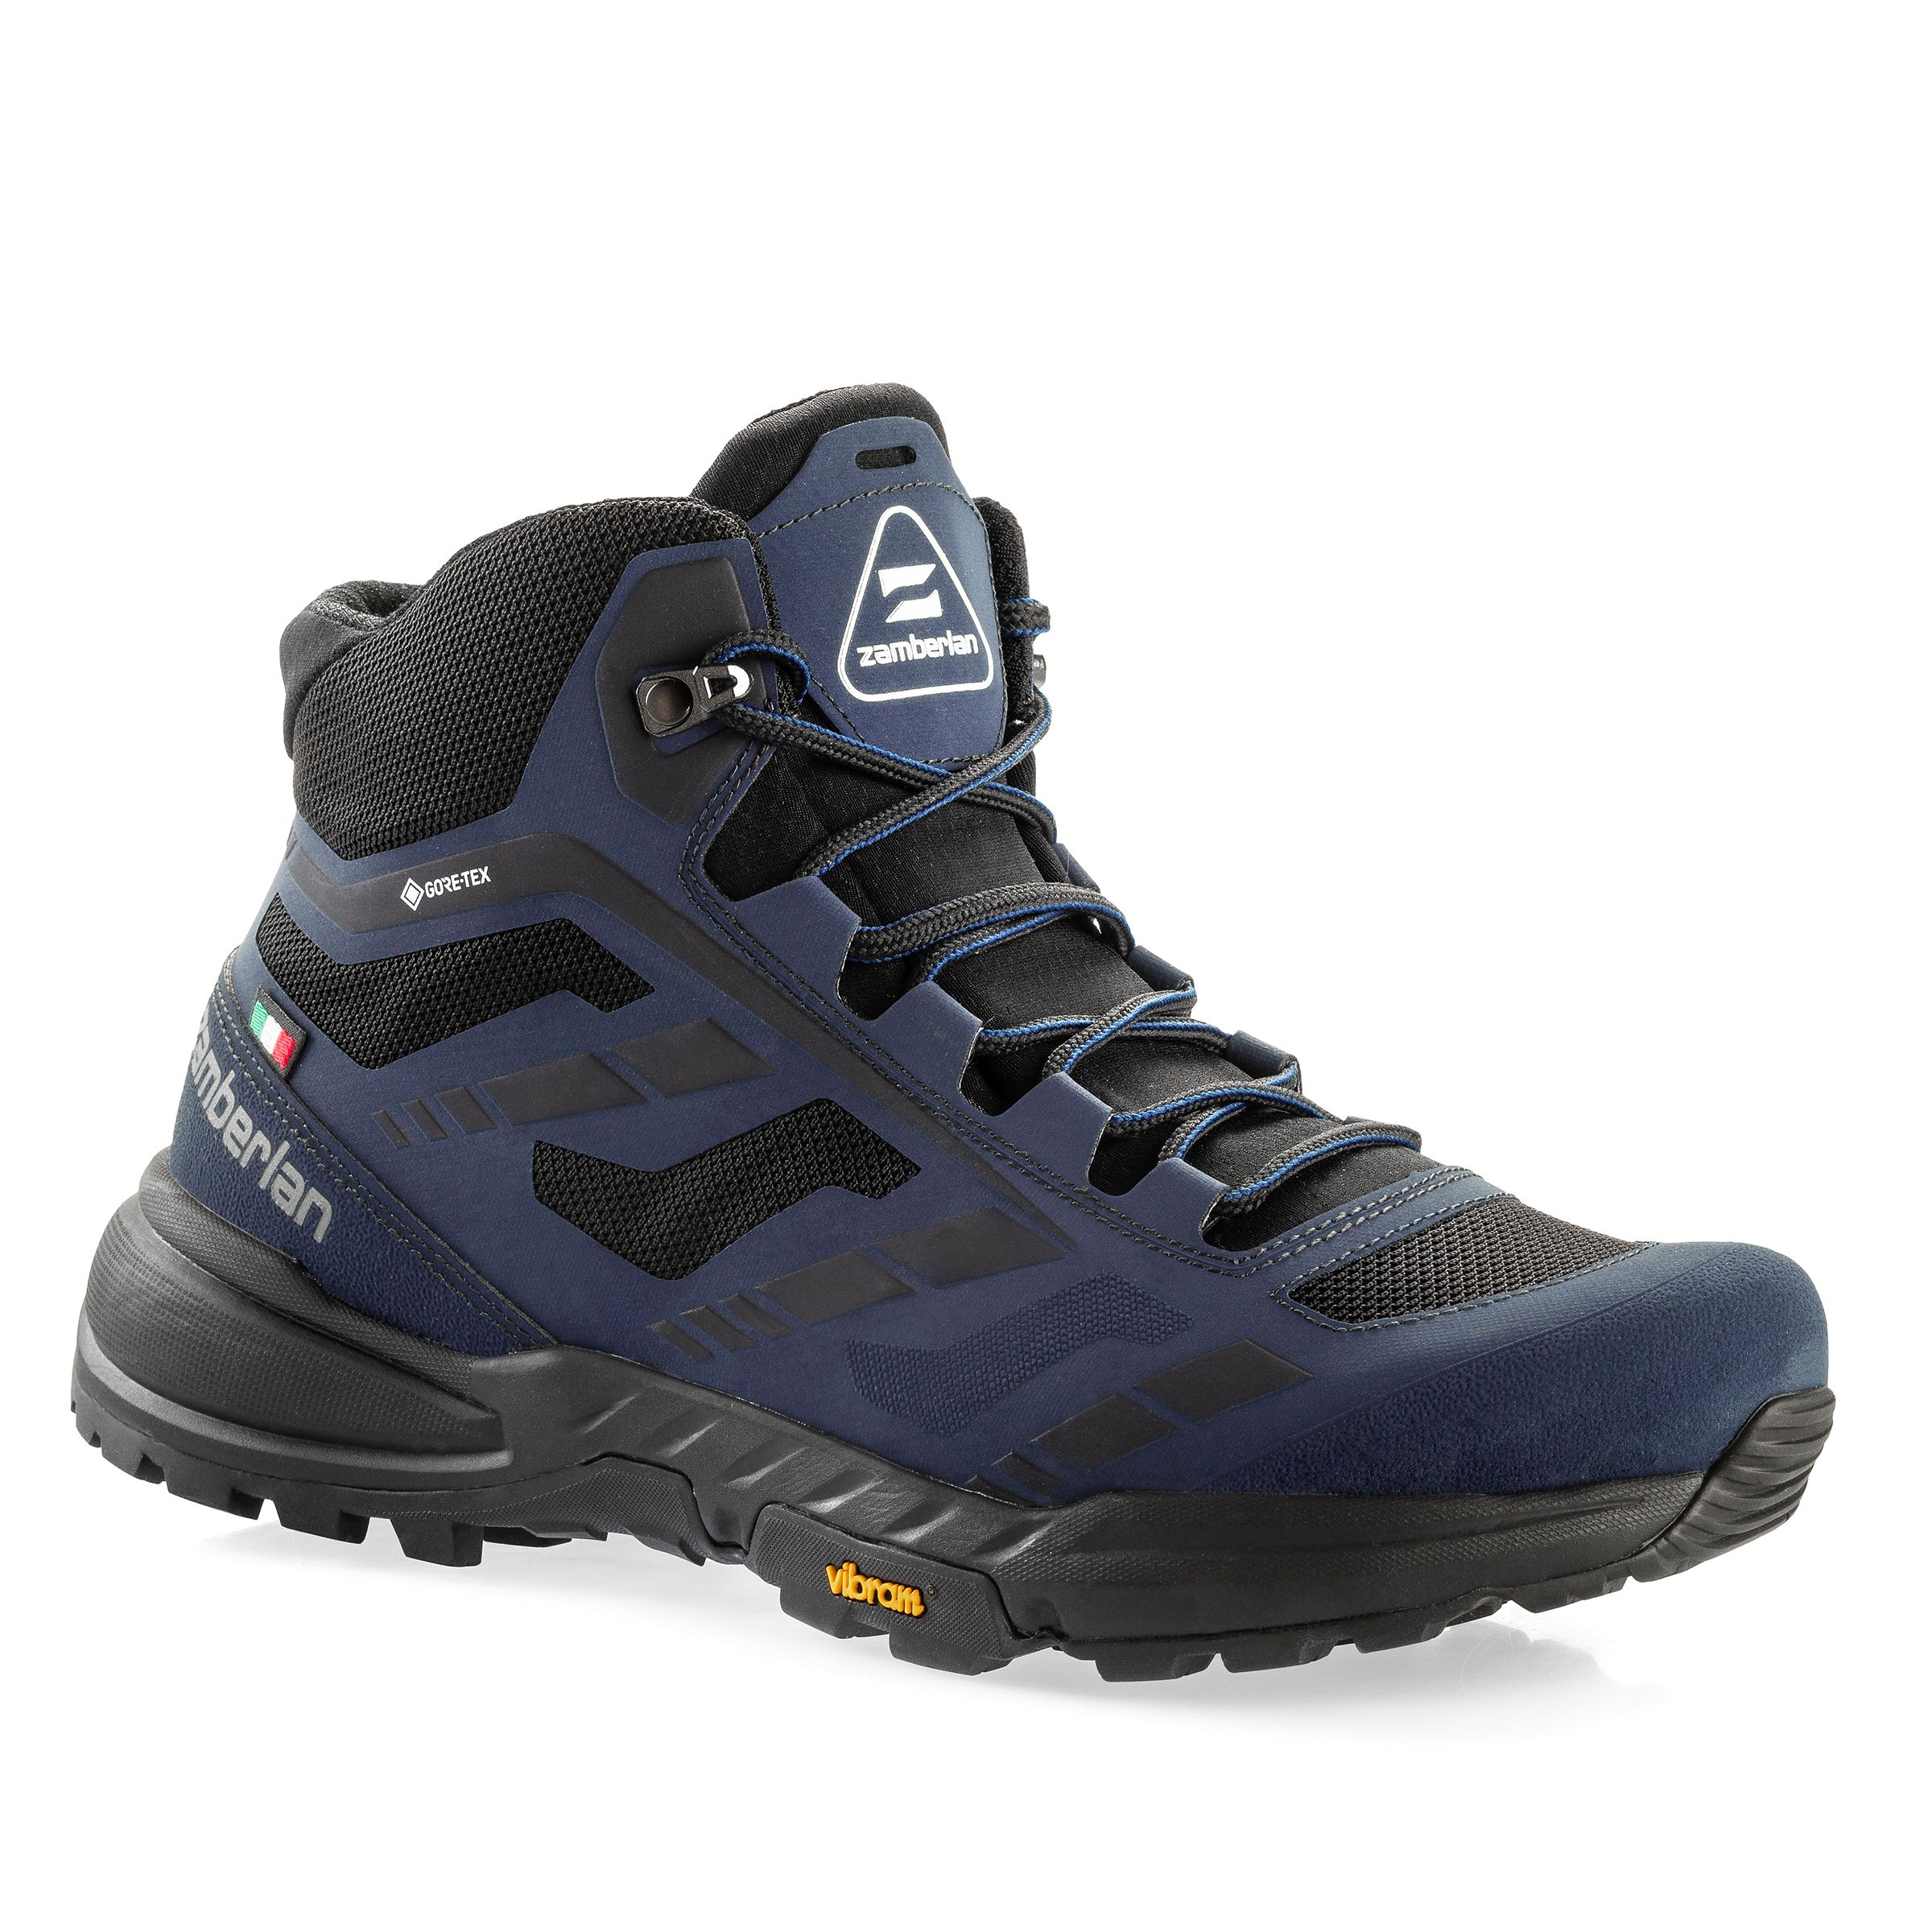 Zamberlan 219 Anabasis GTX Waterproof Mid Hiking Boots for Men - Blue - 13M